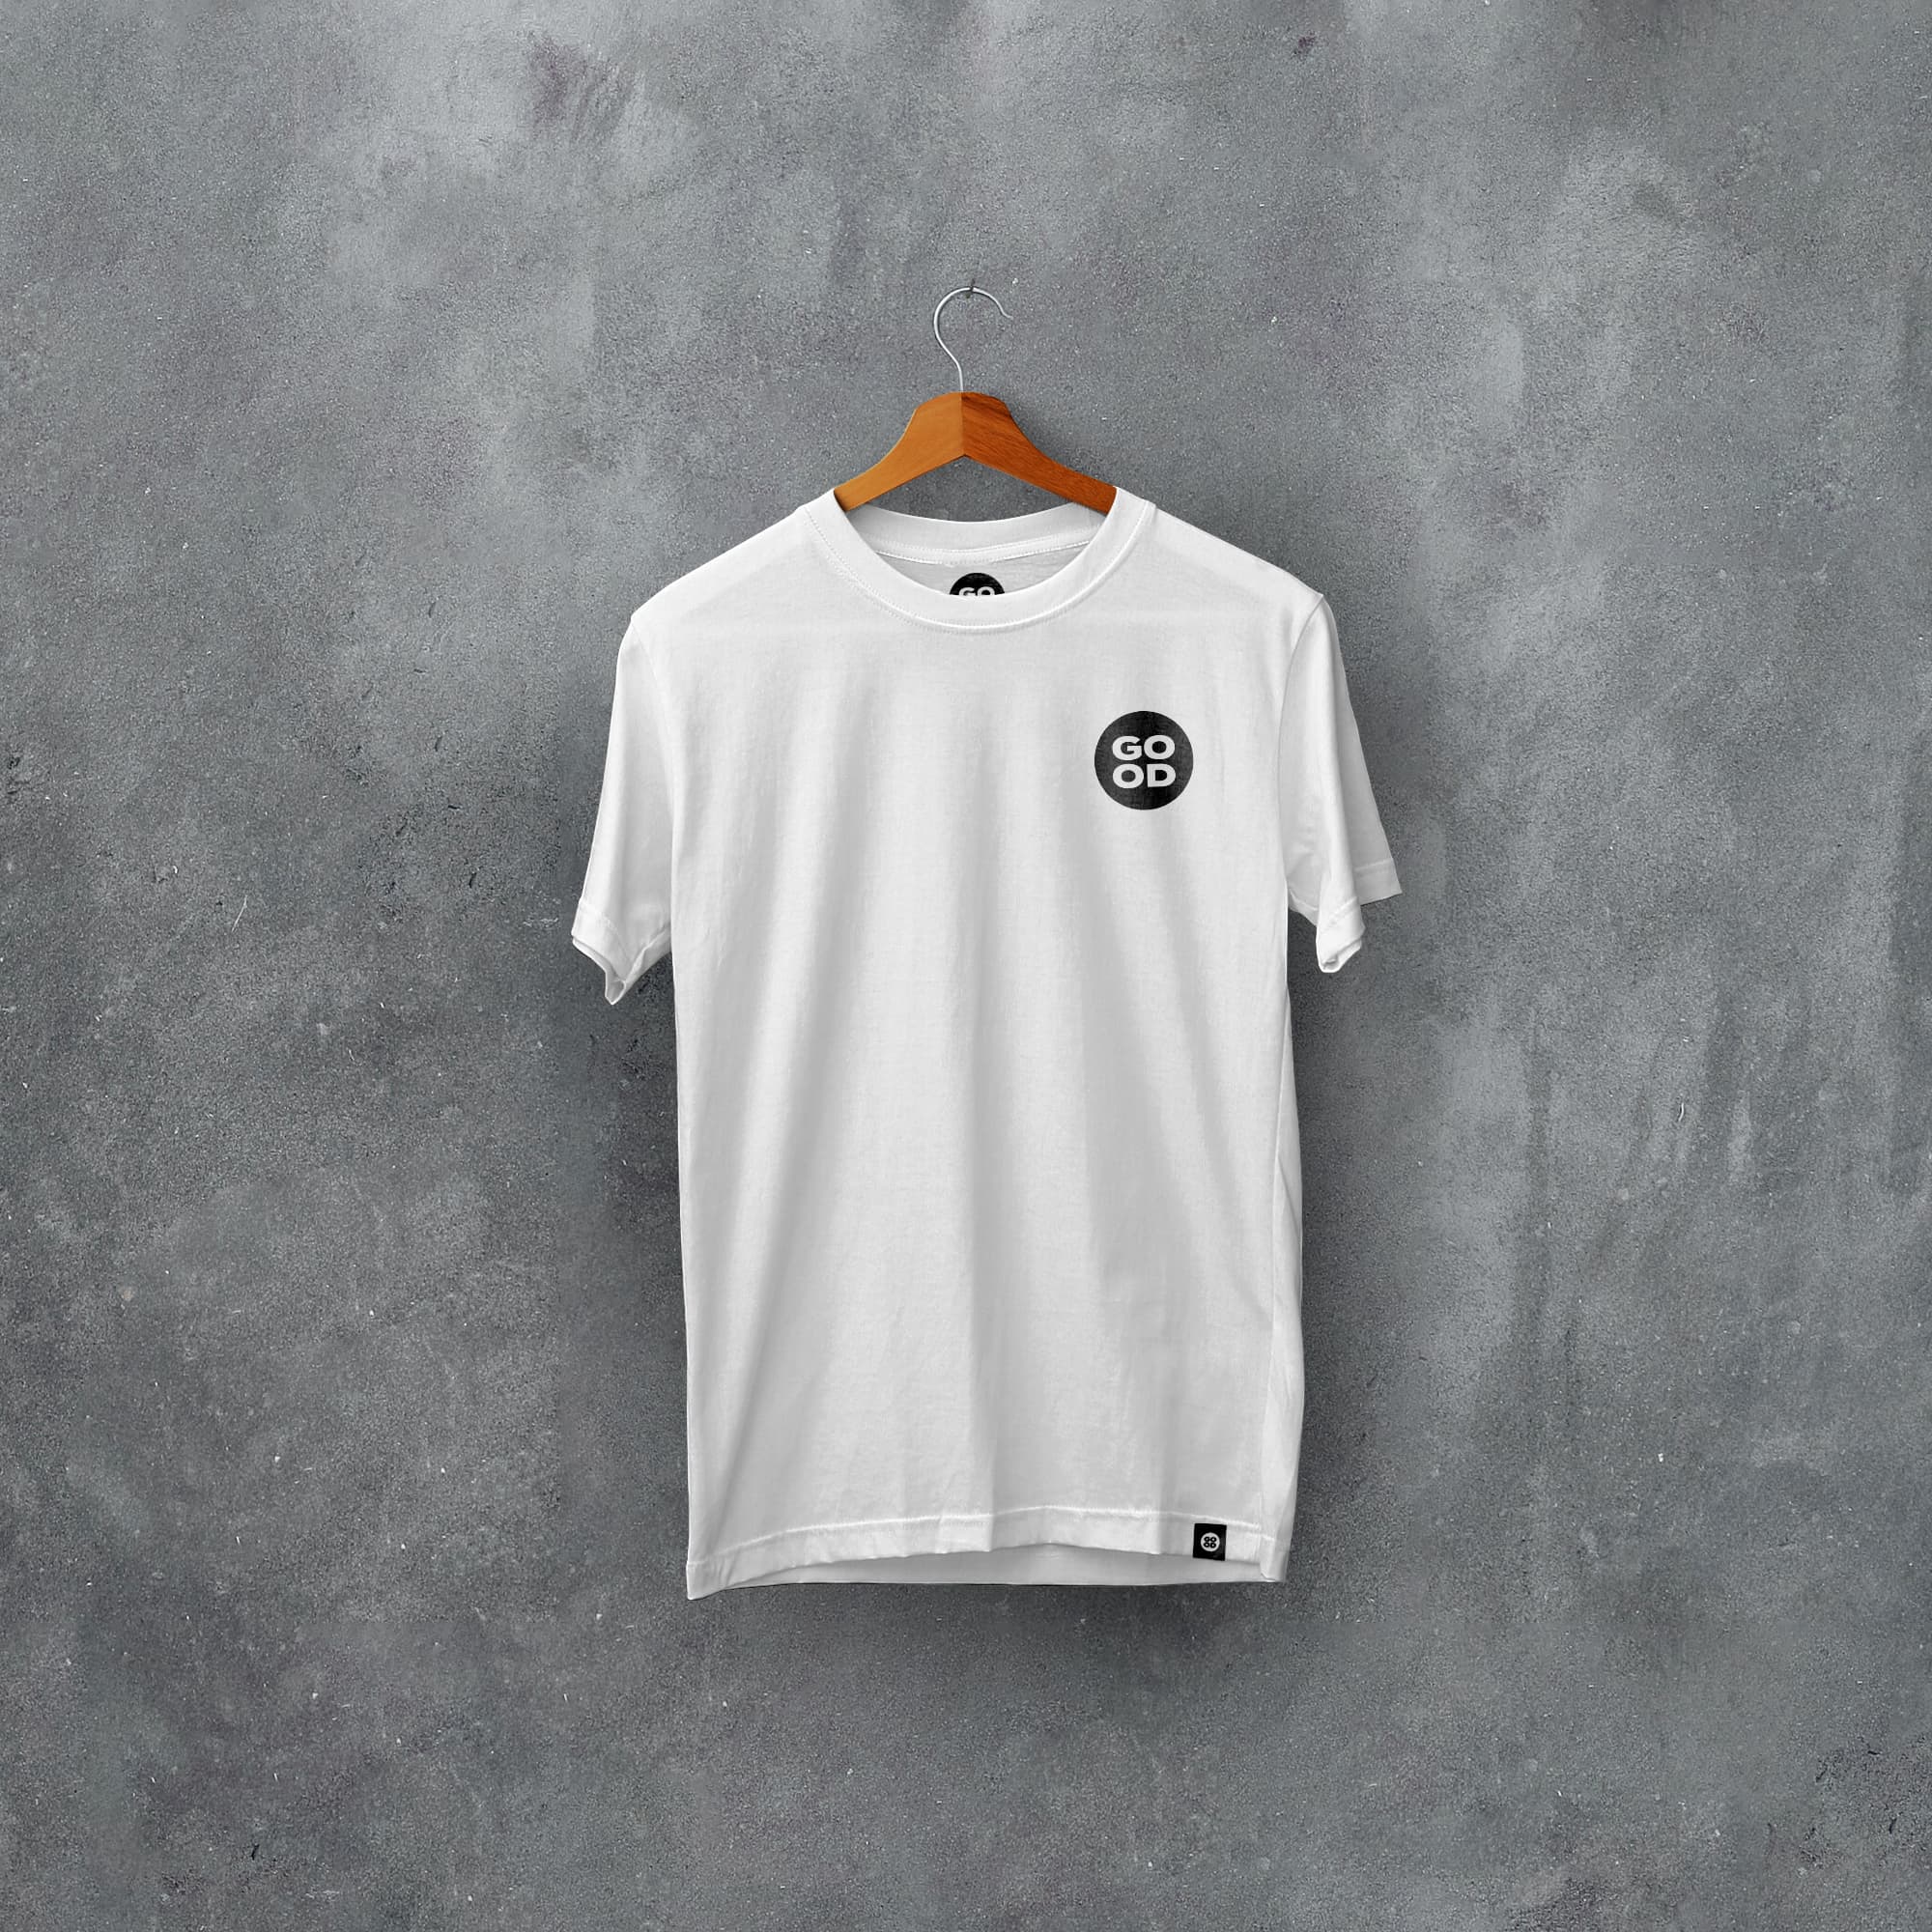 Bradford Classic Kits Football T-Shirt